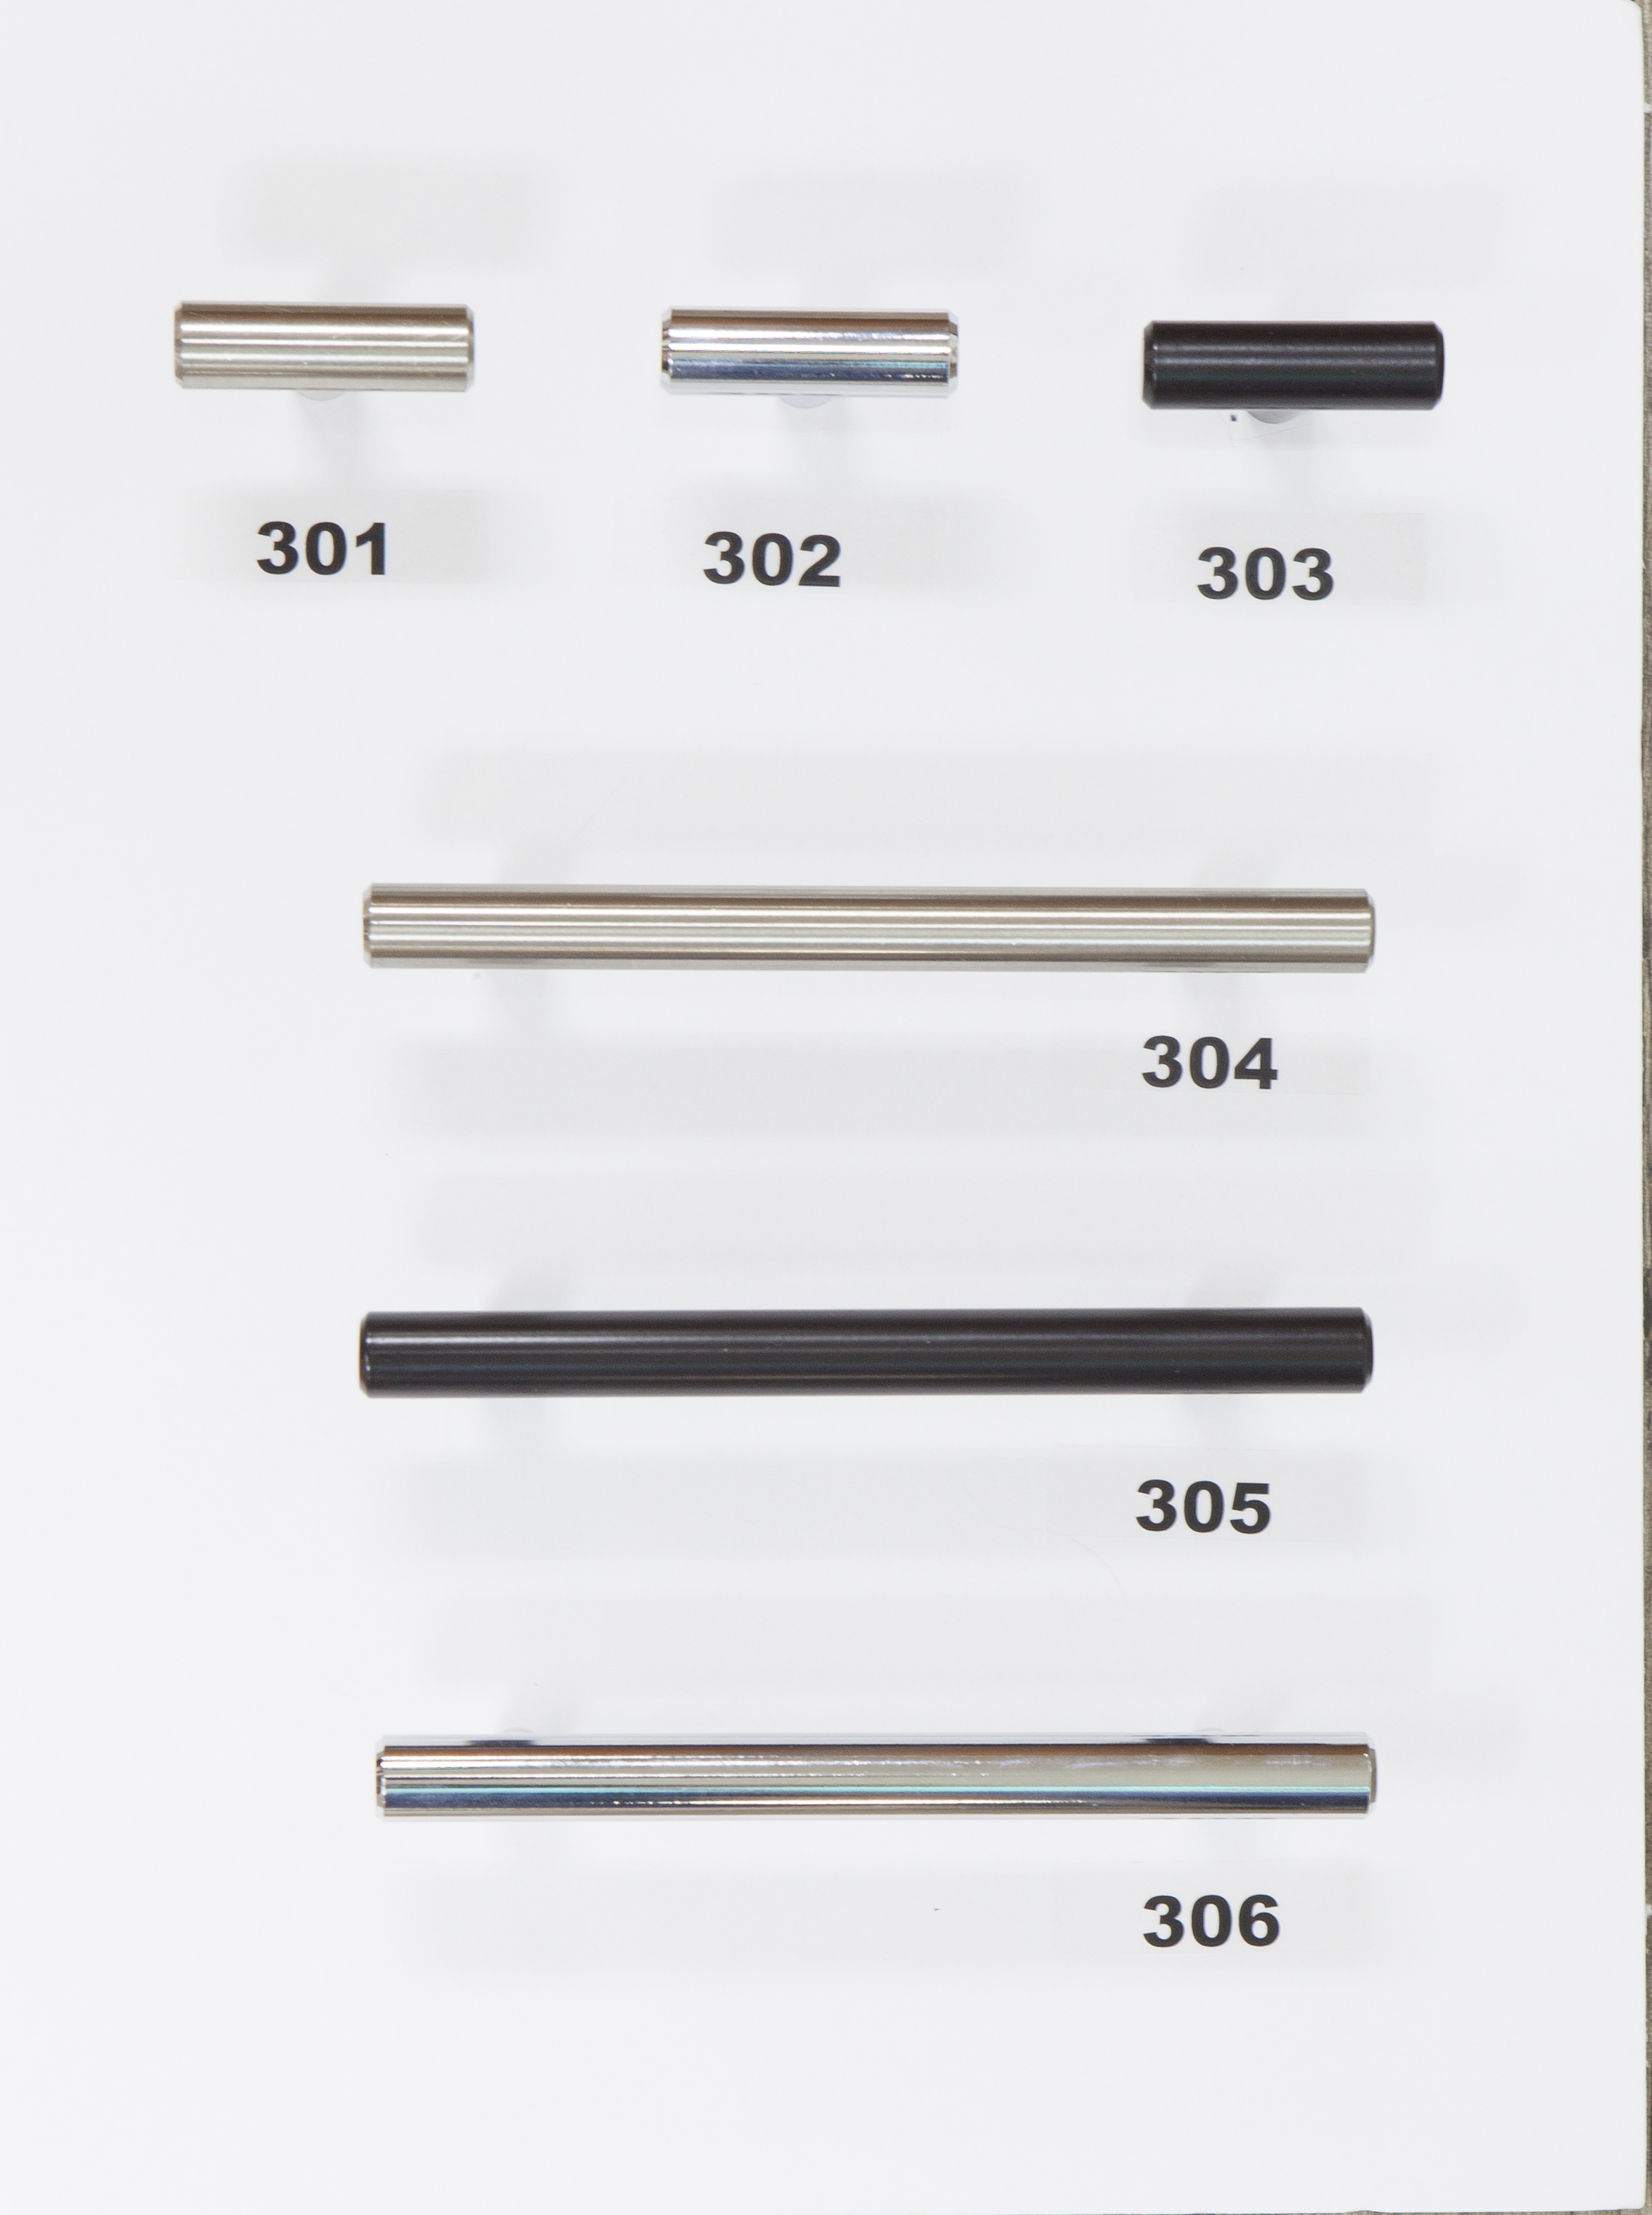  #301 - Knob - Stainless Steel  #302 - Knob - Polished Chrome  #303 - Knob - Flat Black  #304 - 3 3/4” center - Stainless Steel  #305 - 3 3/4” center - Flat Black  #306 - 3 3/3'“ center - Polished Chrome 